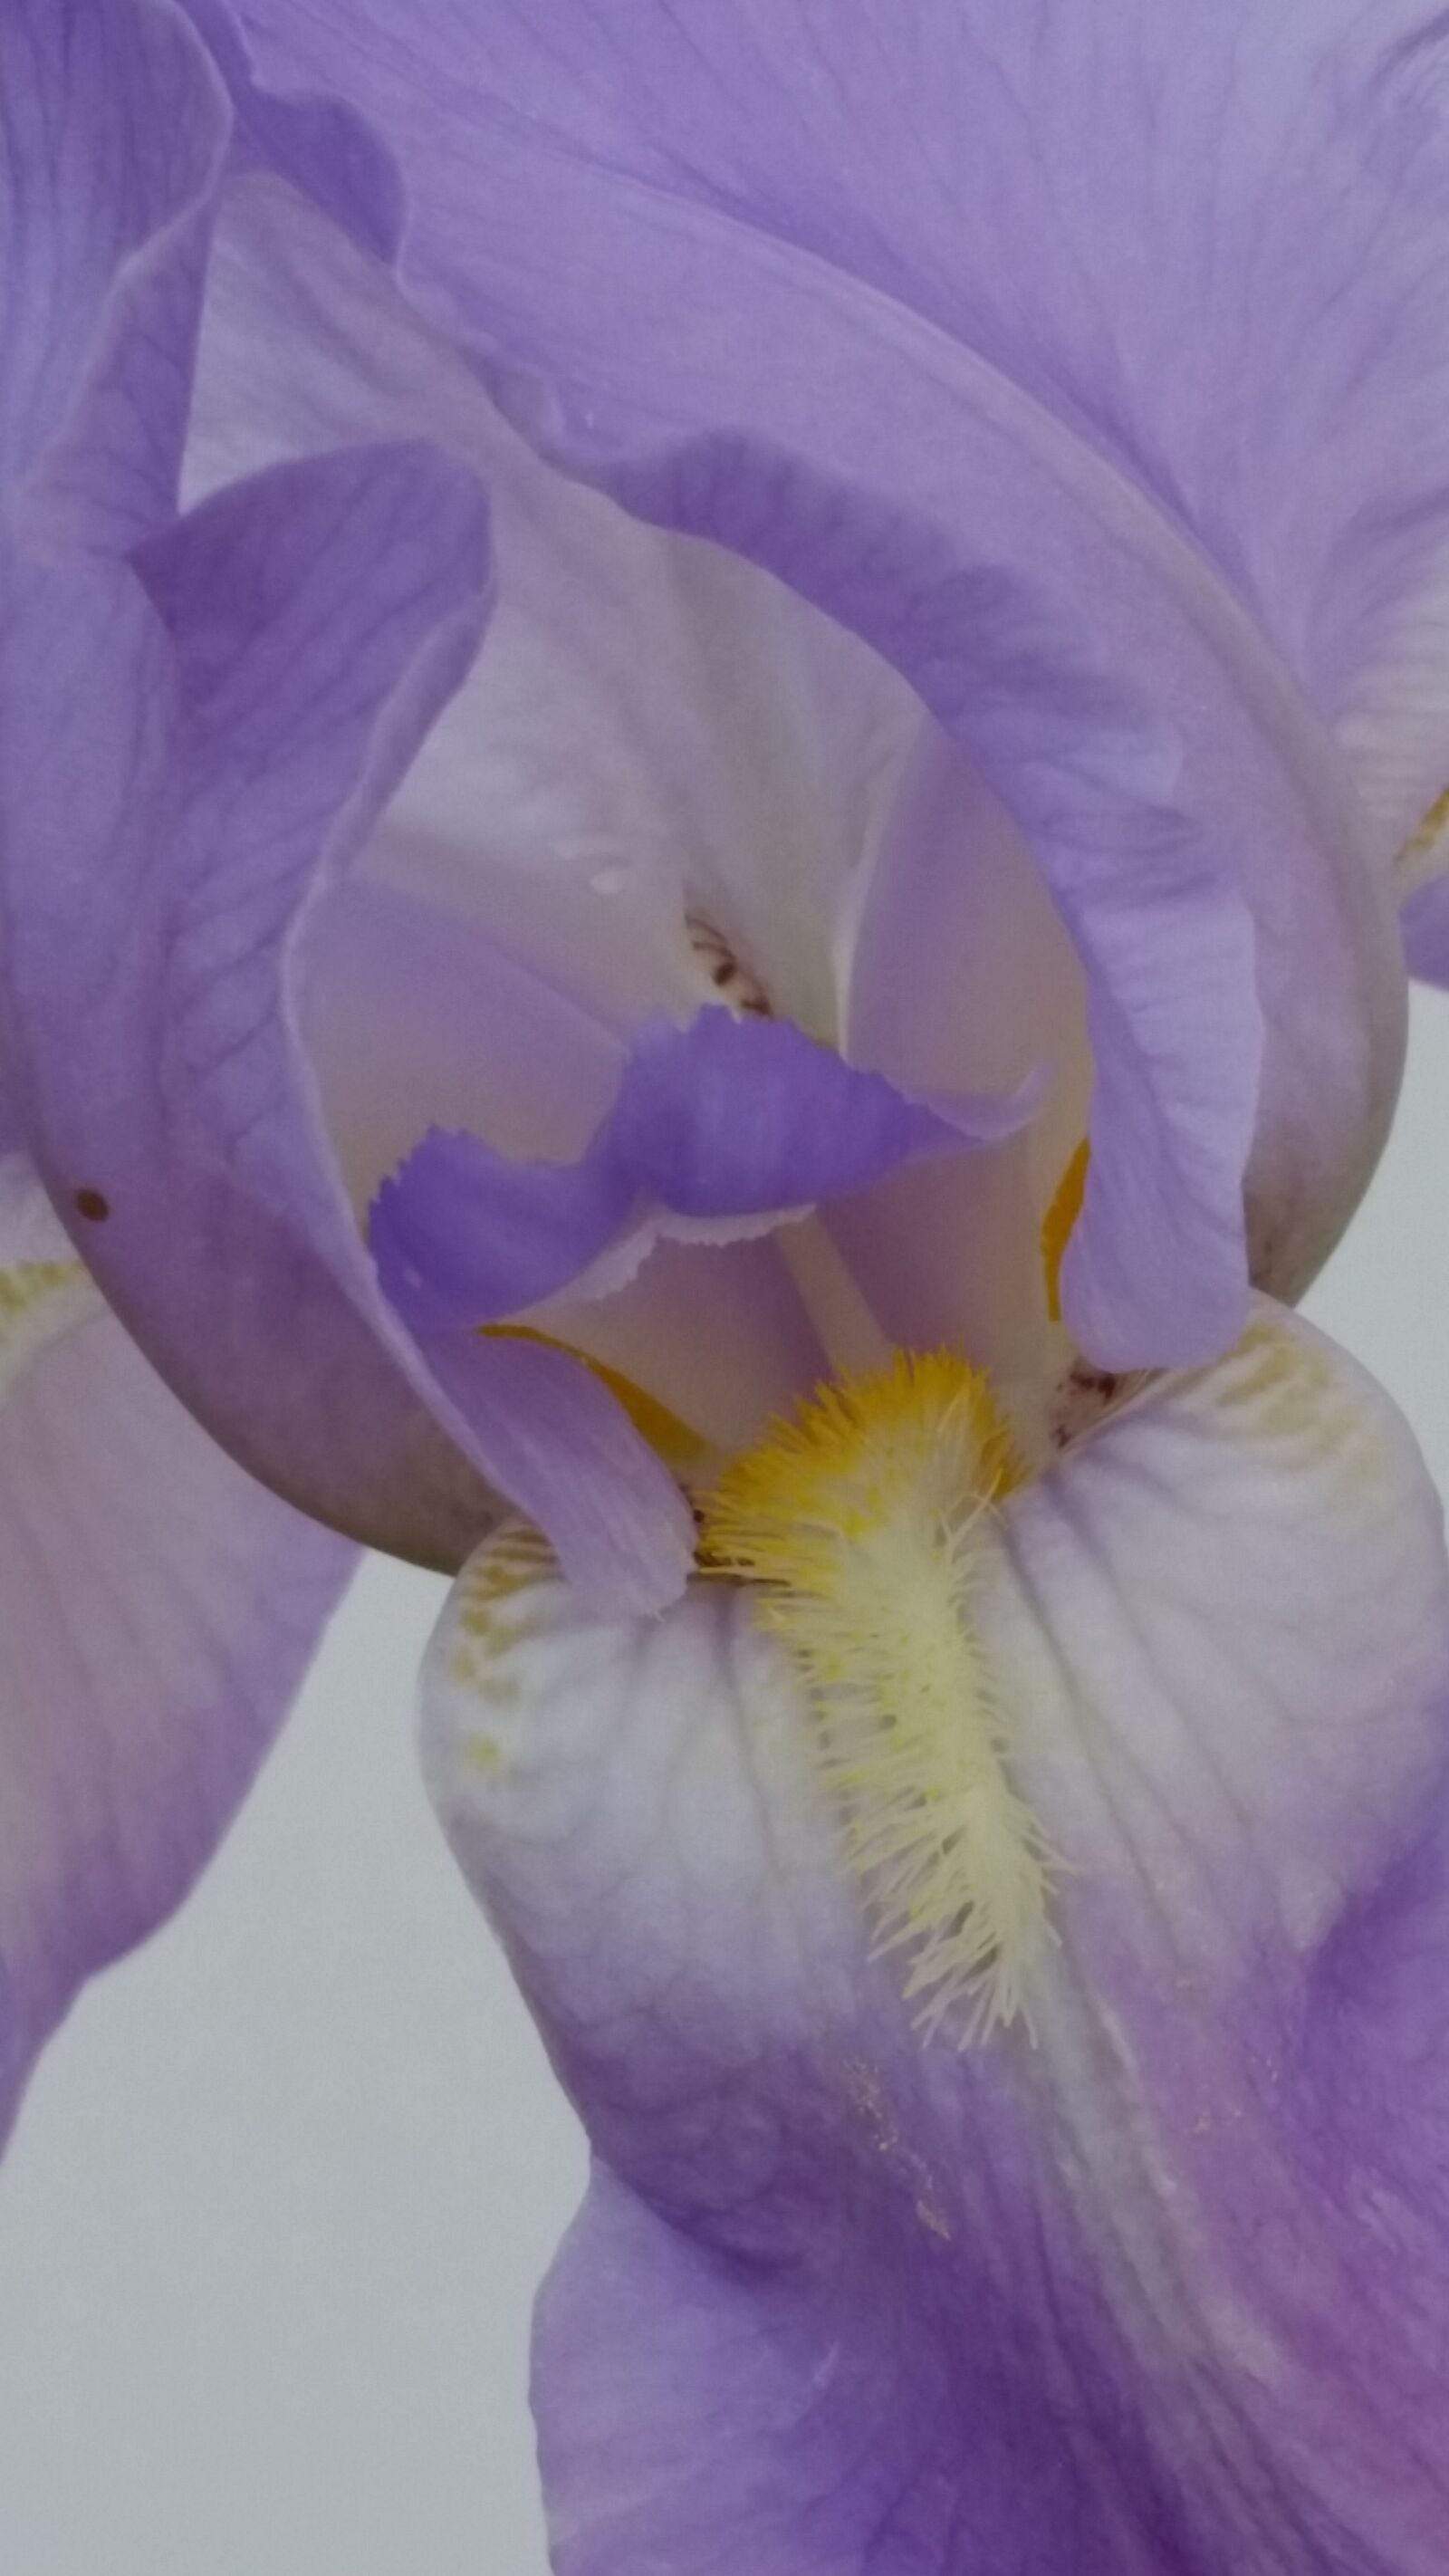 Samsung Galaxy S5 sample photo. Iris, flower, interior view photography